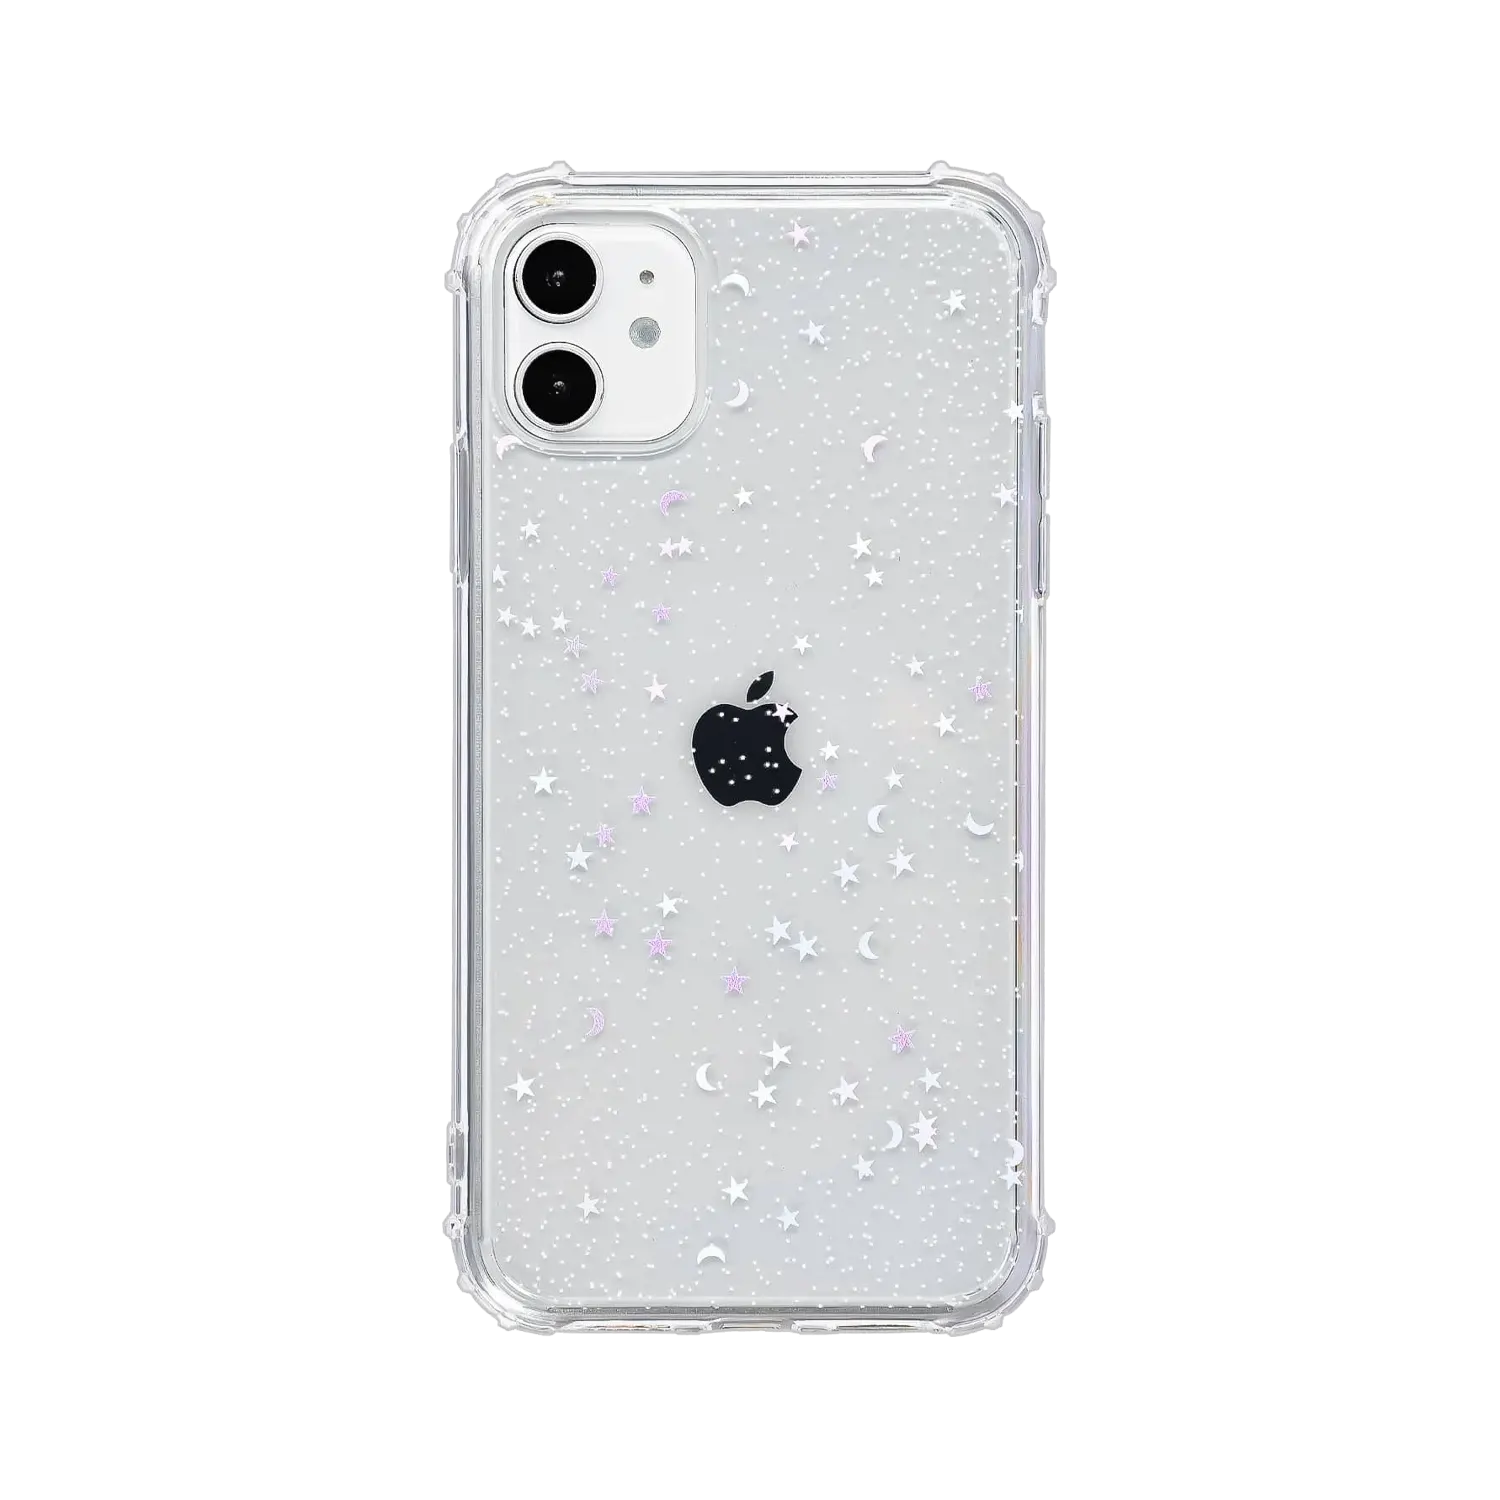 Stars & moon iphone 11 case